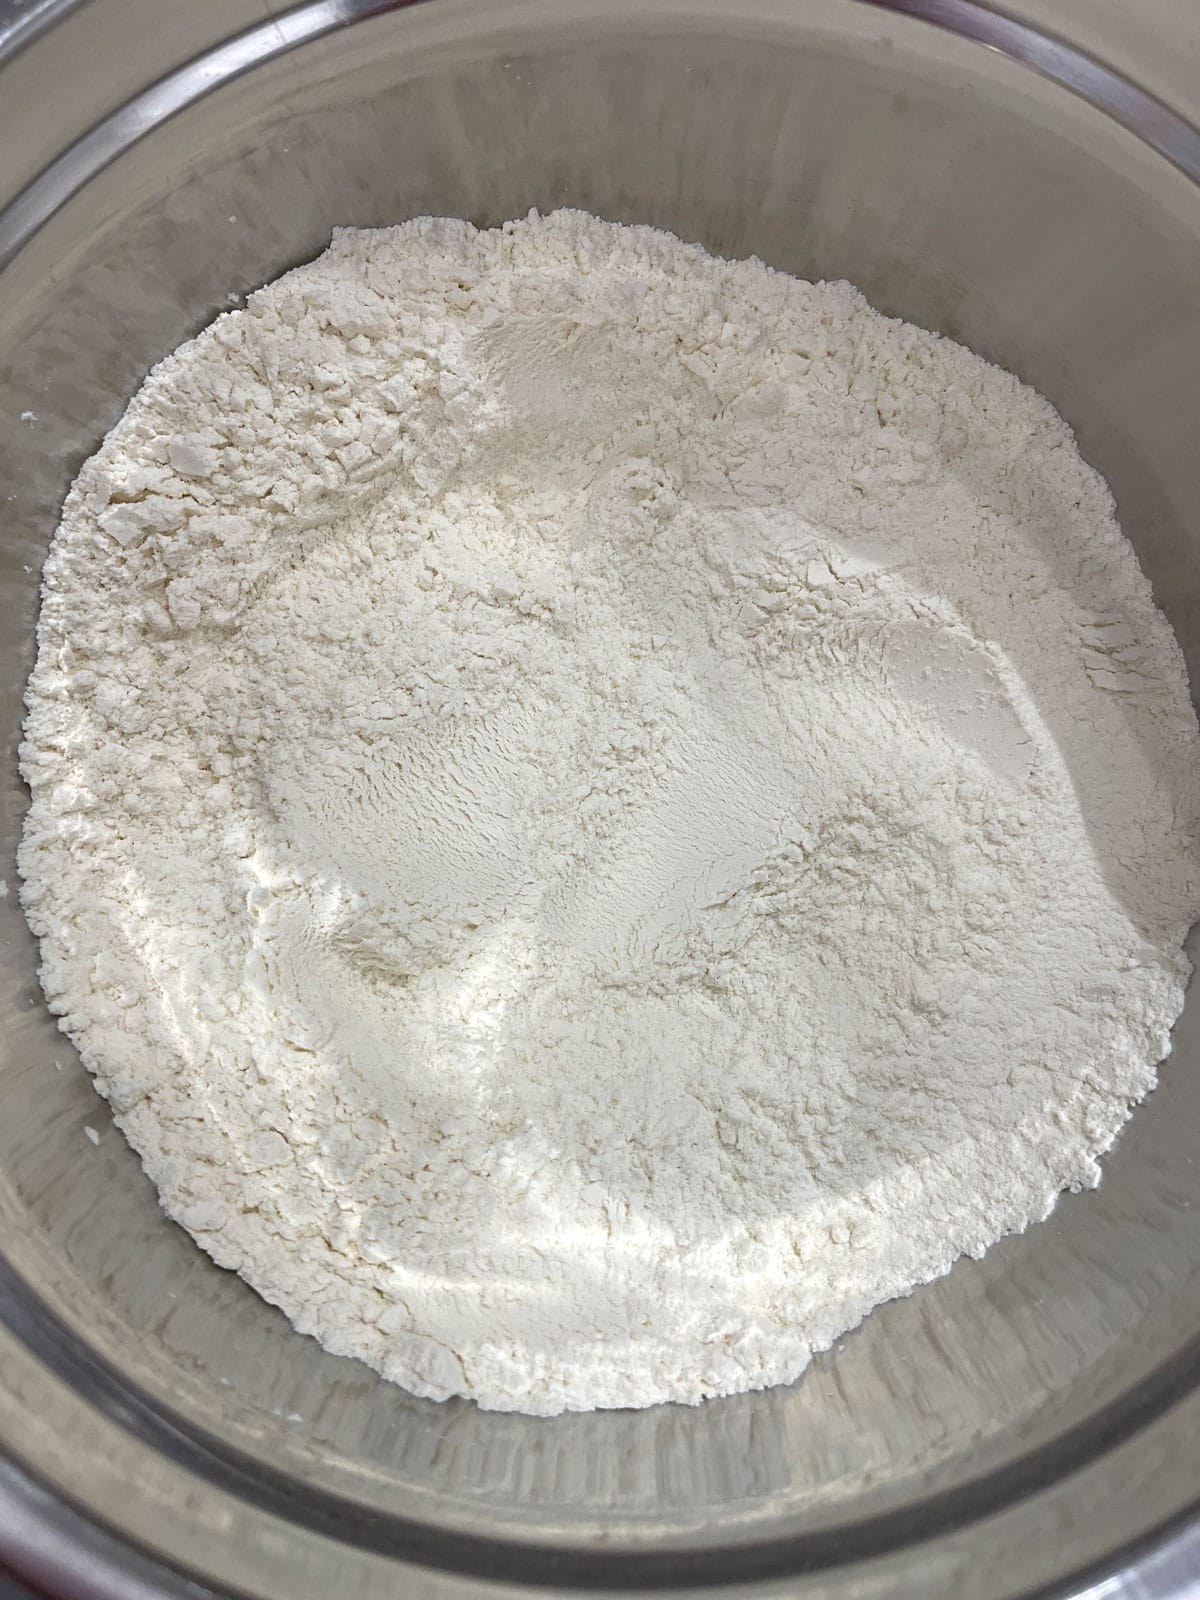 flour mixed with baking powder, sugar and salt